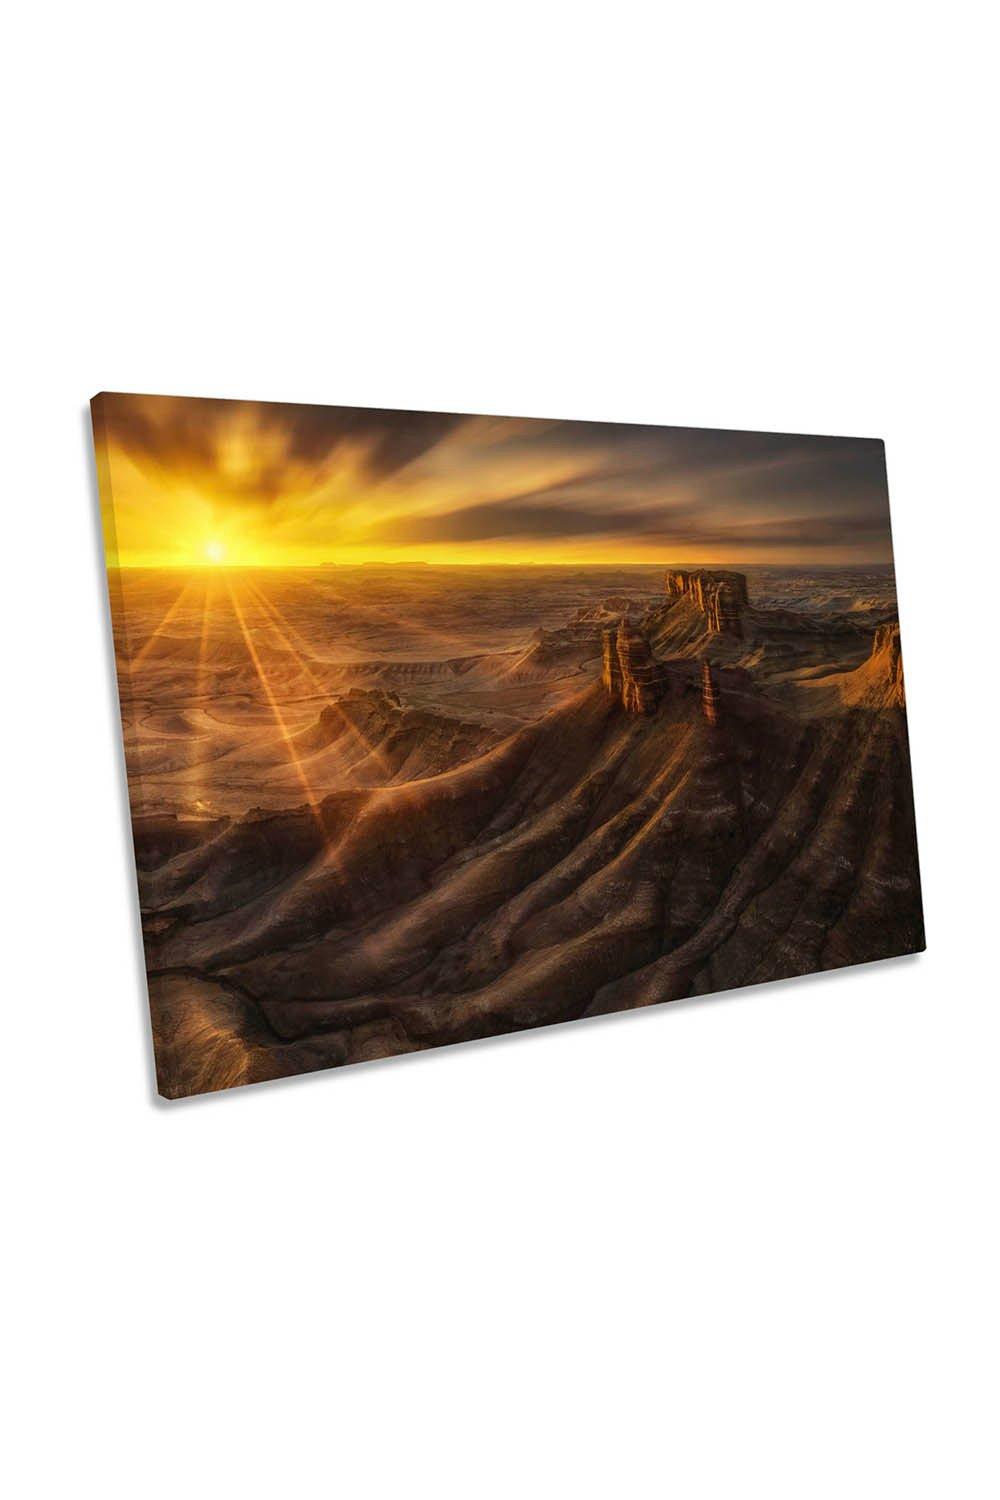 Utah Canyons Sunrise Landscape Canvas Wall Art Picture Print